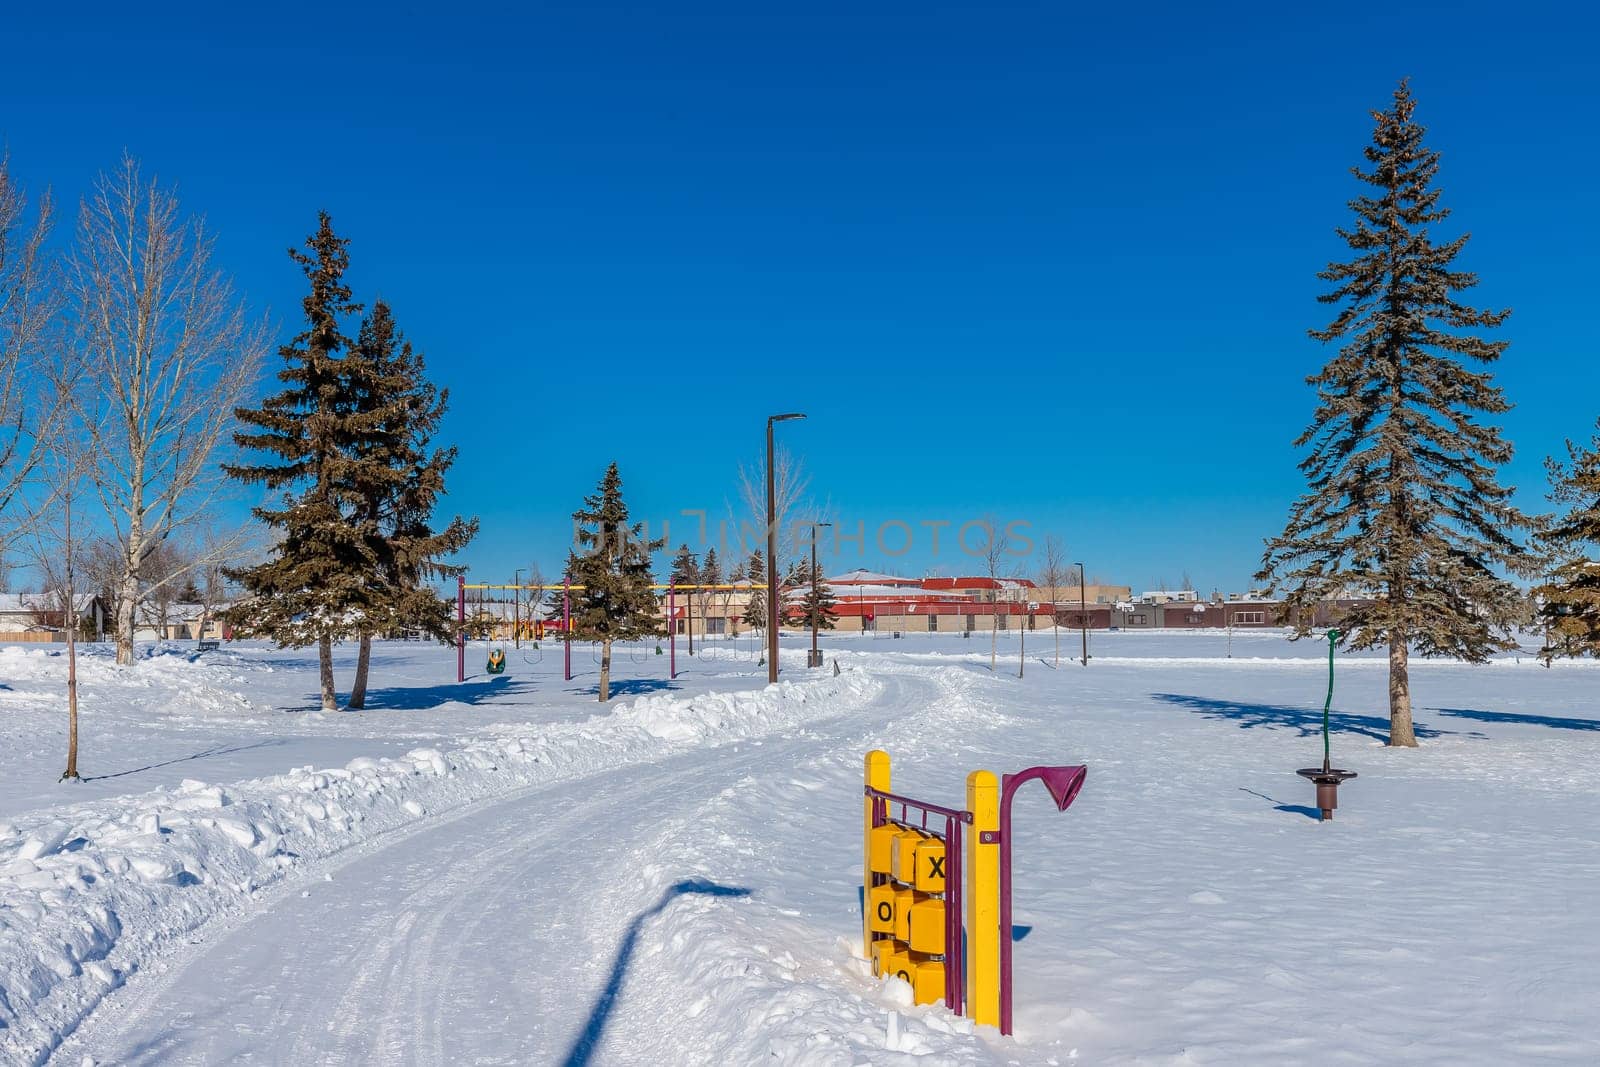 Dundonald Park is located in the Dundonald neighborhood of Saskatoon.